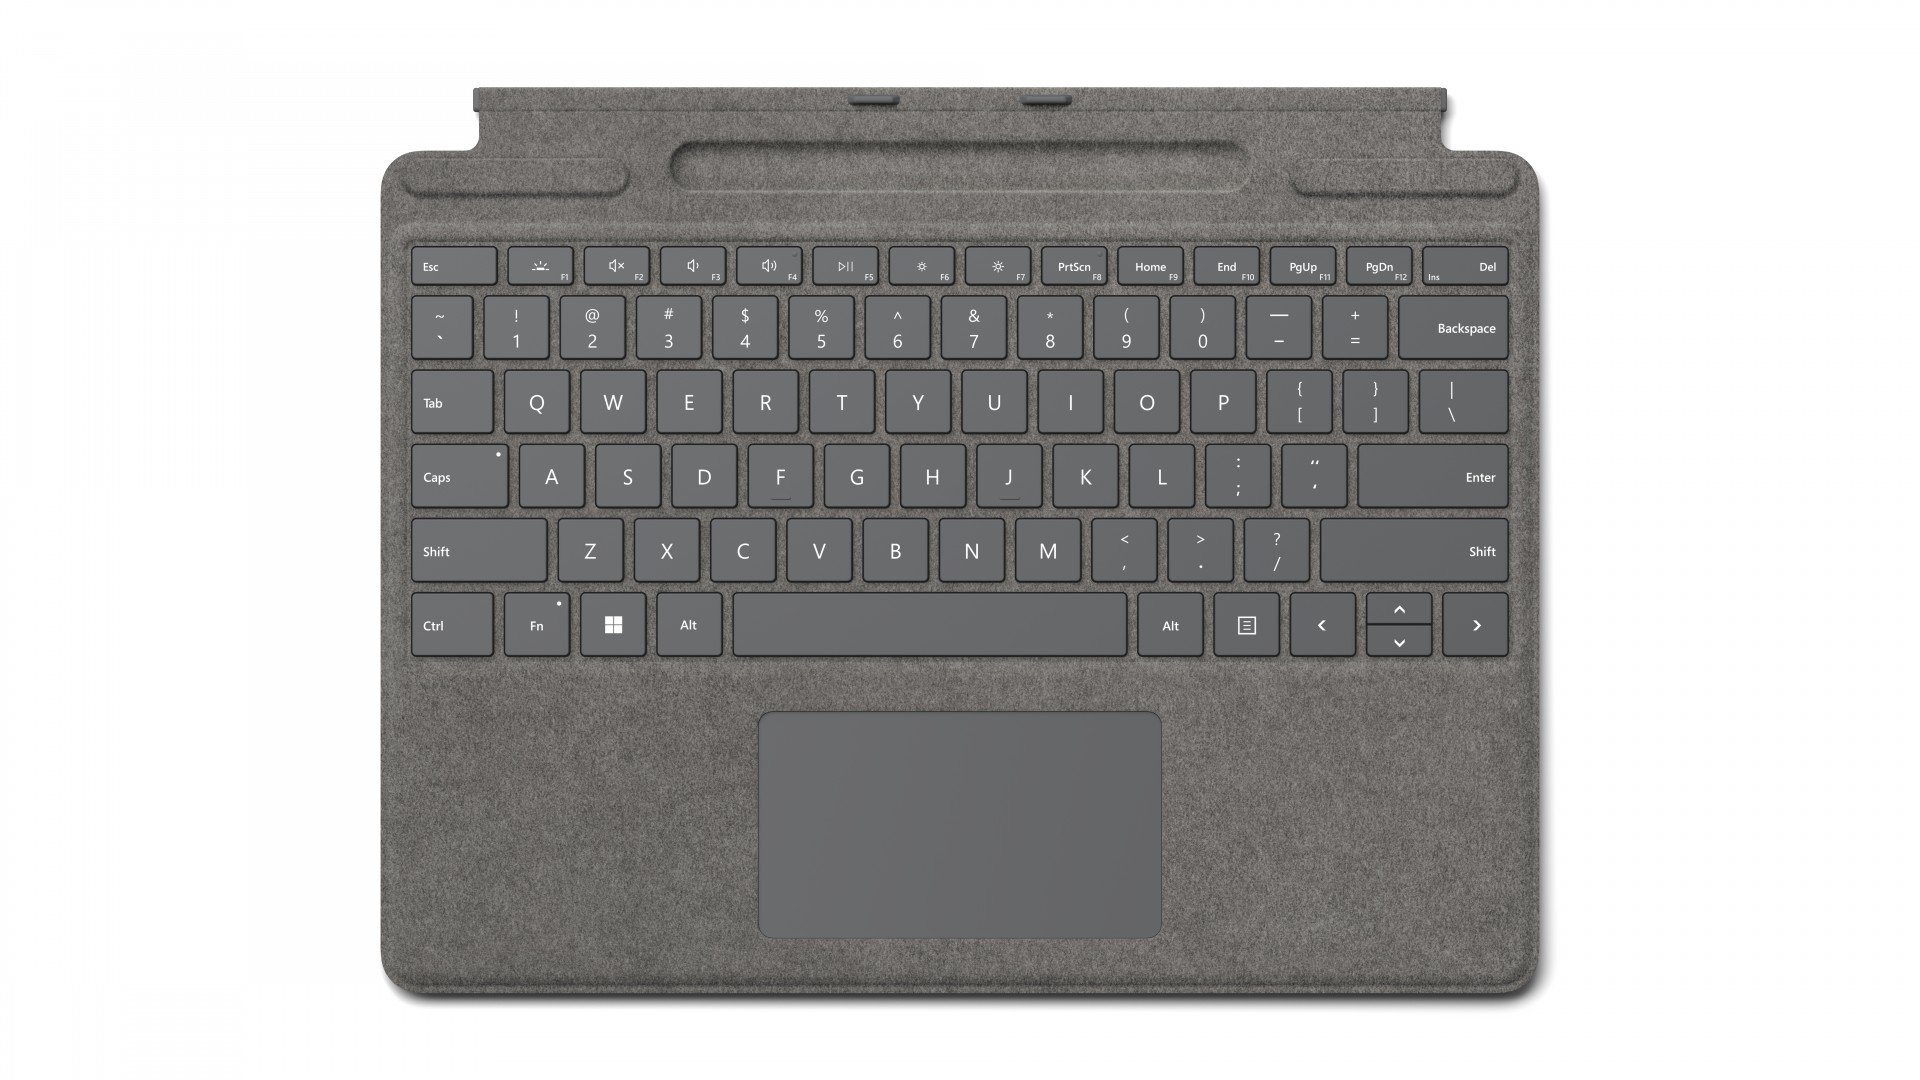 Microsoft Surface Pro Signature Keyboard Platină  Cover port QWERTY Englez (8XB-00067)